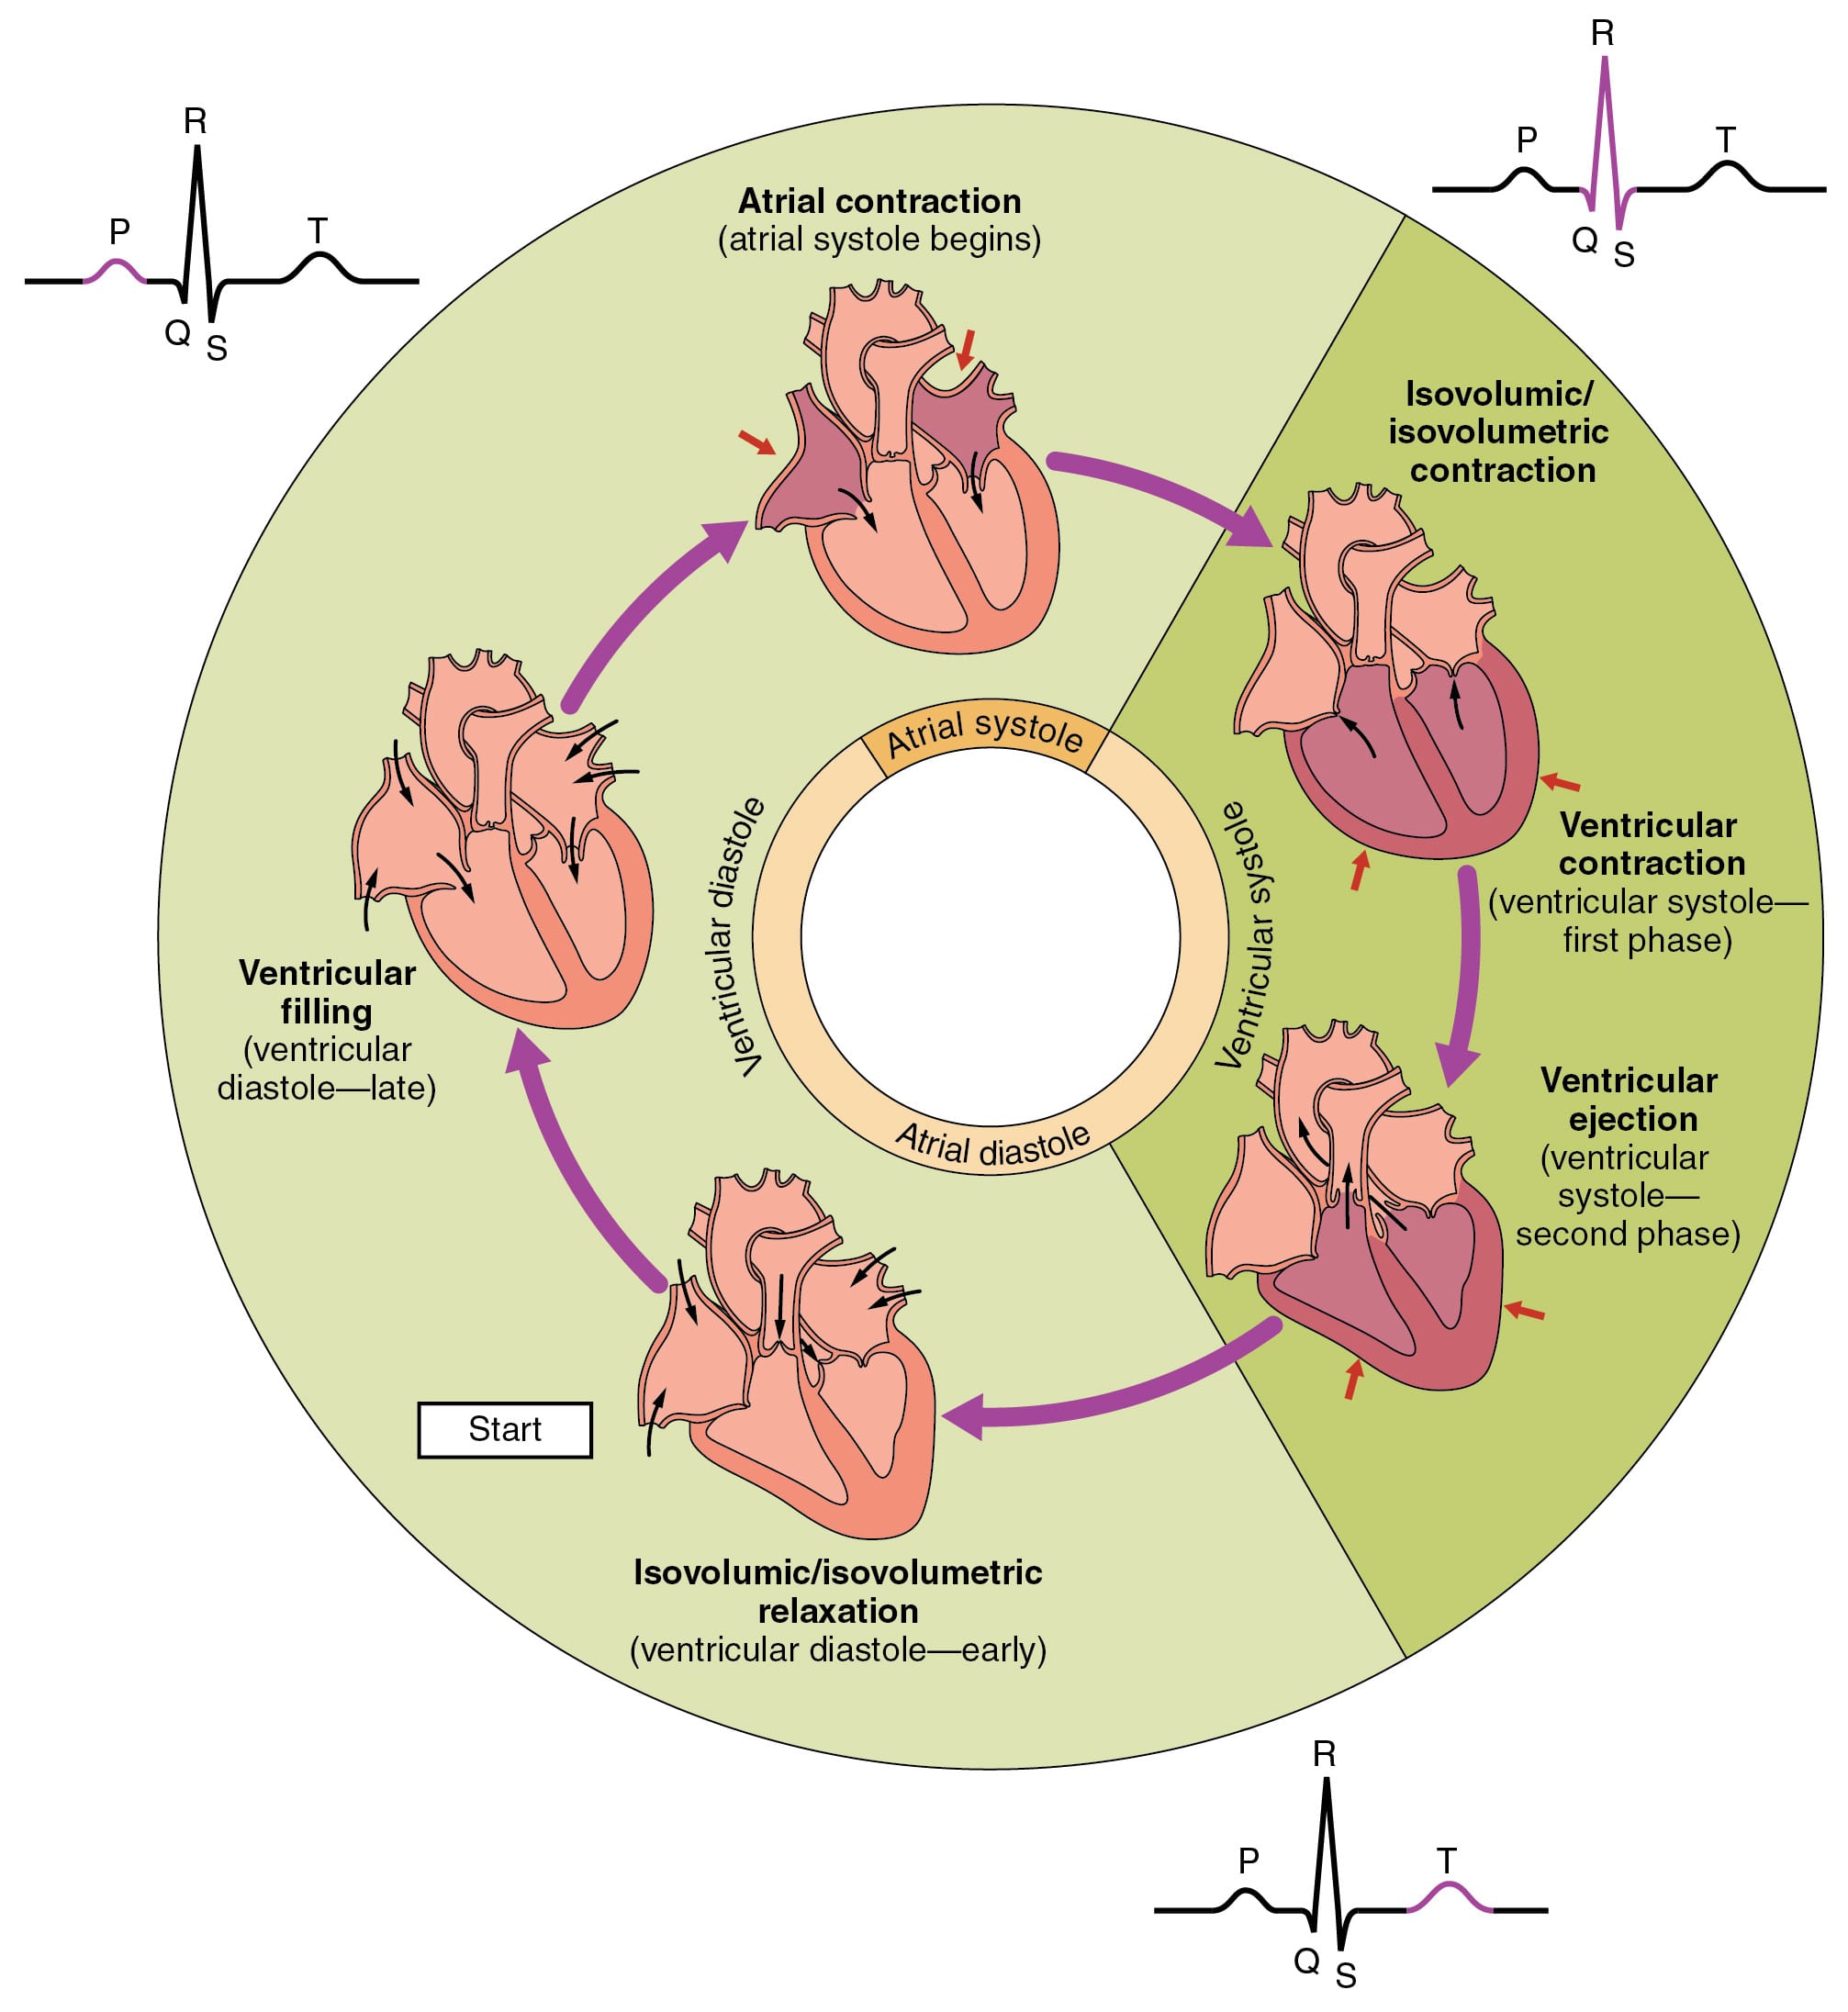 193-cardiac-cycle-anatomy-and-physiology-db-excel